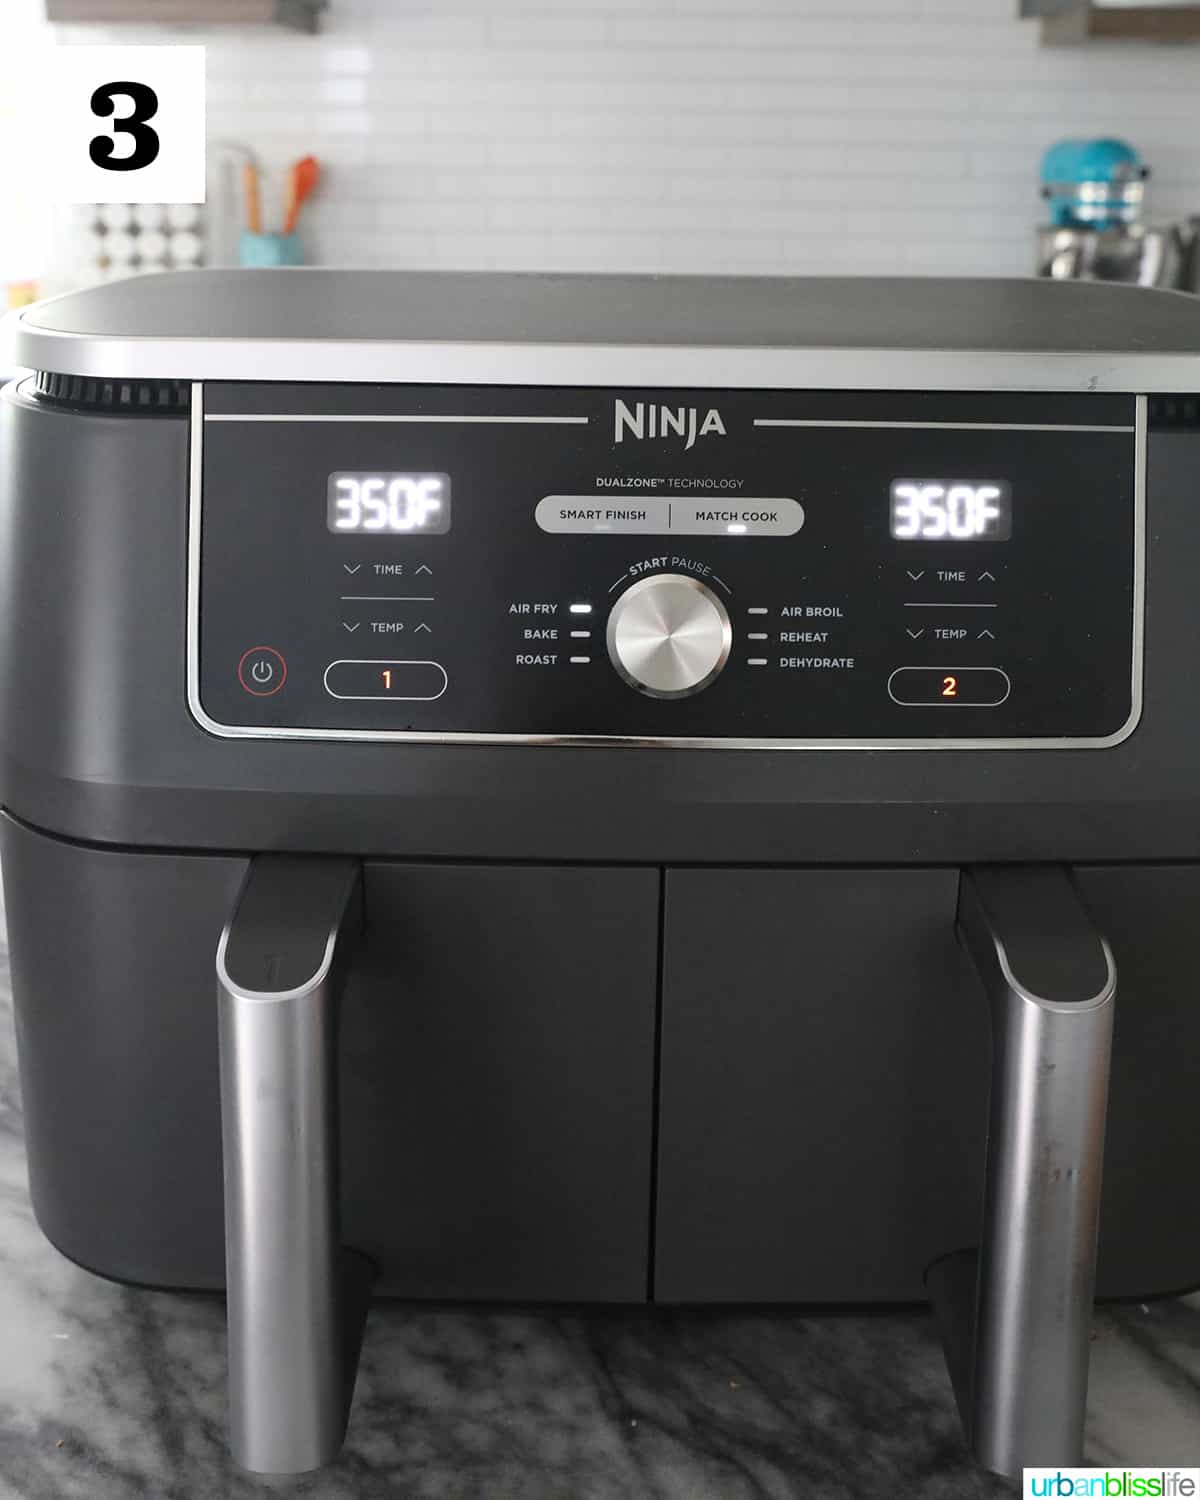 Ninja Foodi dual air fryer set for 350 degrees on a marble countertop.